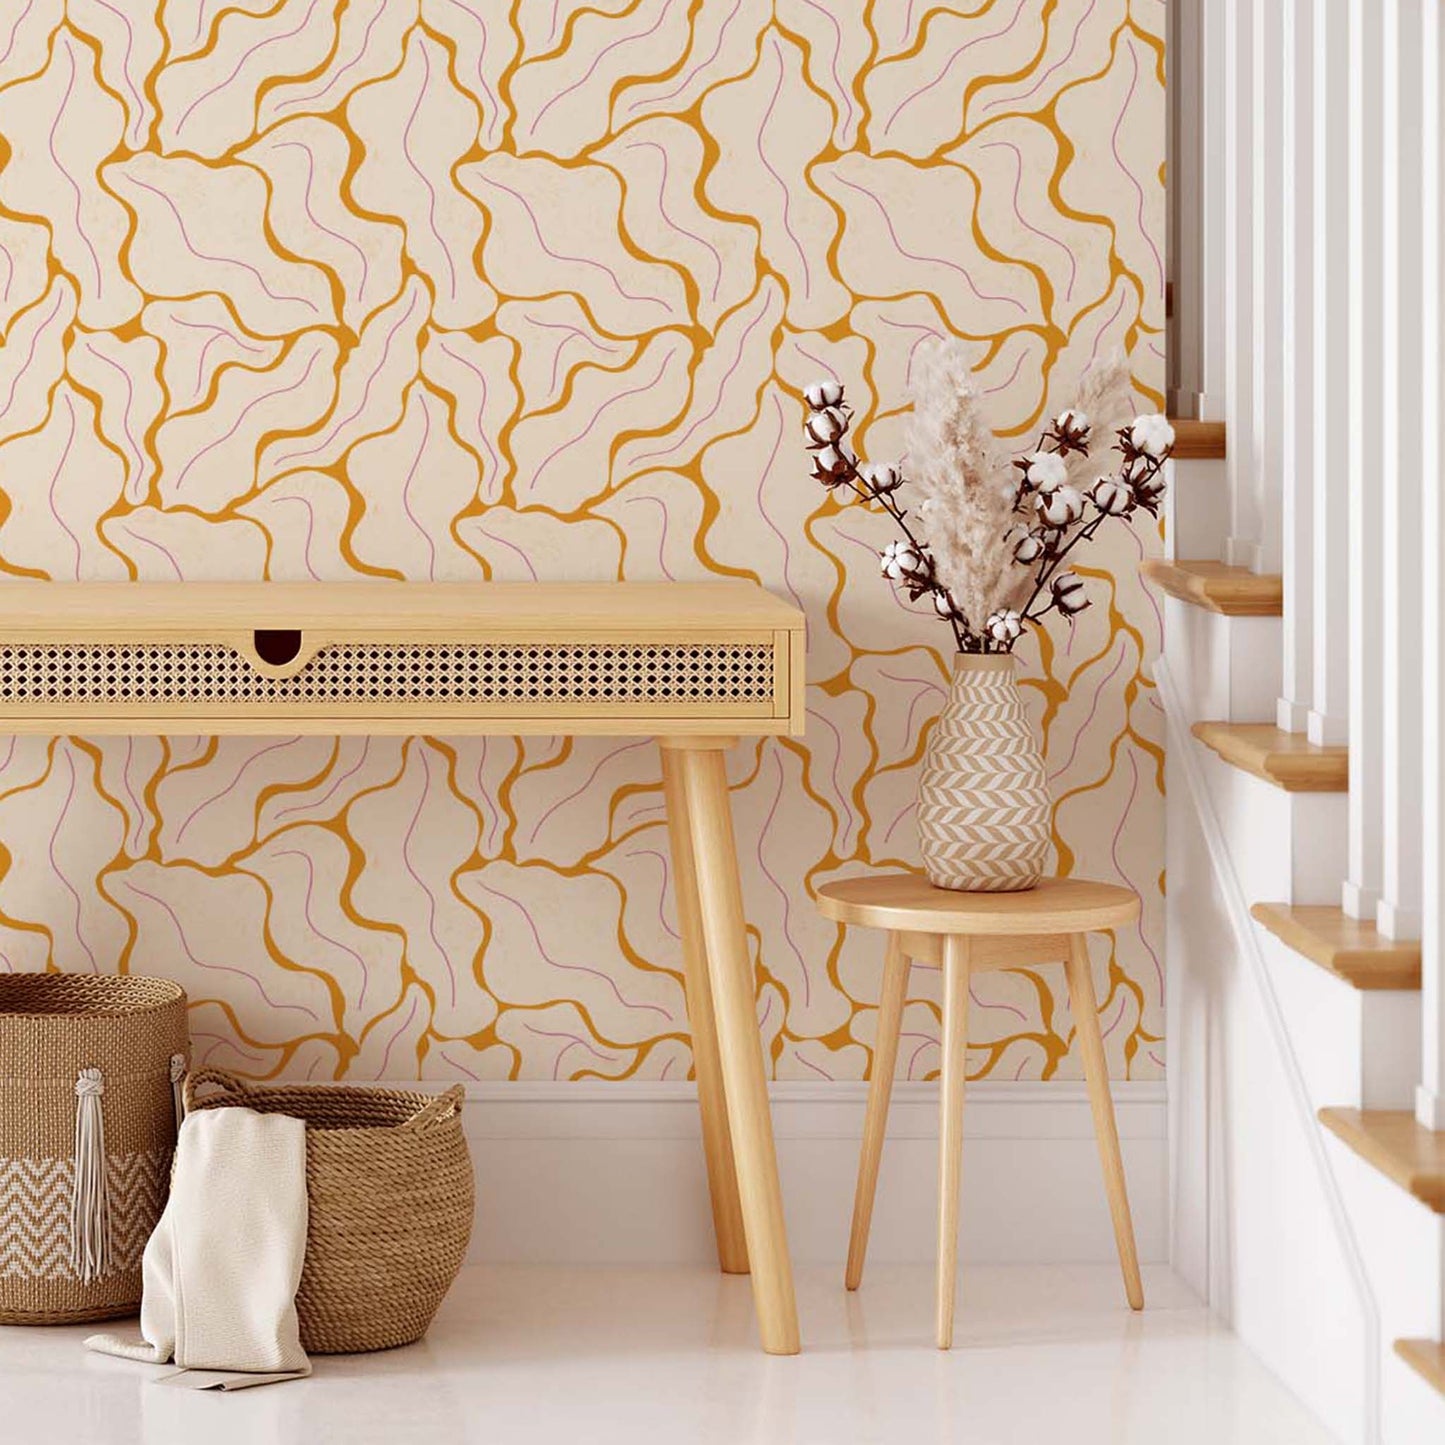 Living Room featuring our Modern Leaves Wallpaper in Mustard by artist Brenda Bird for Ayara